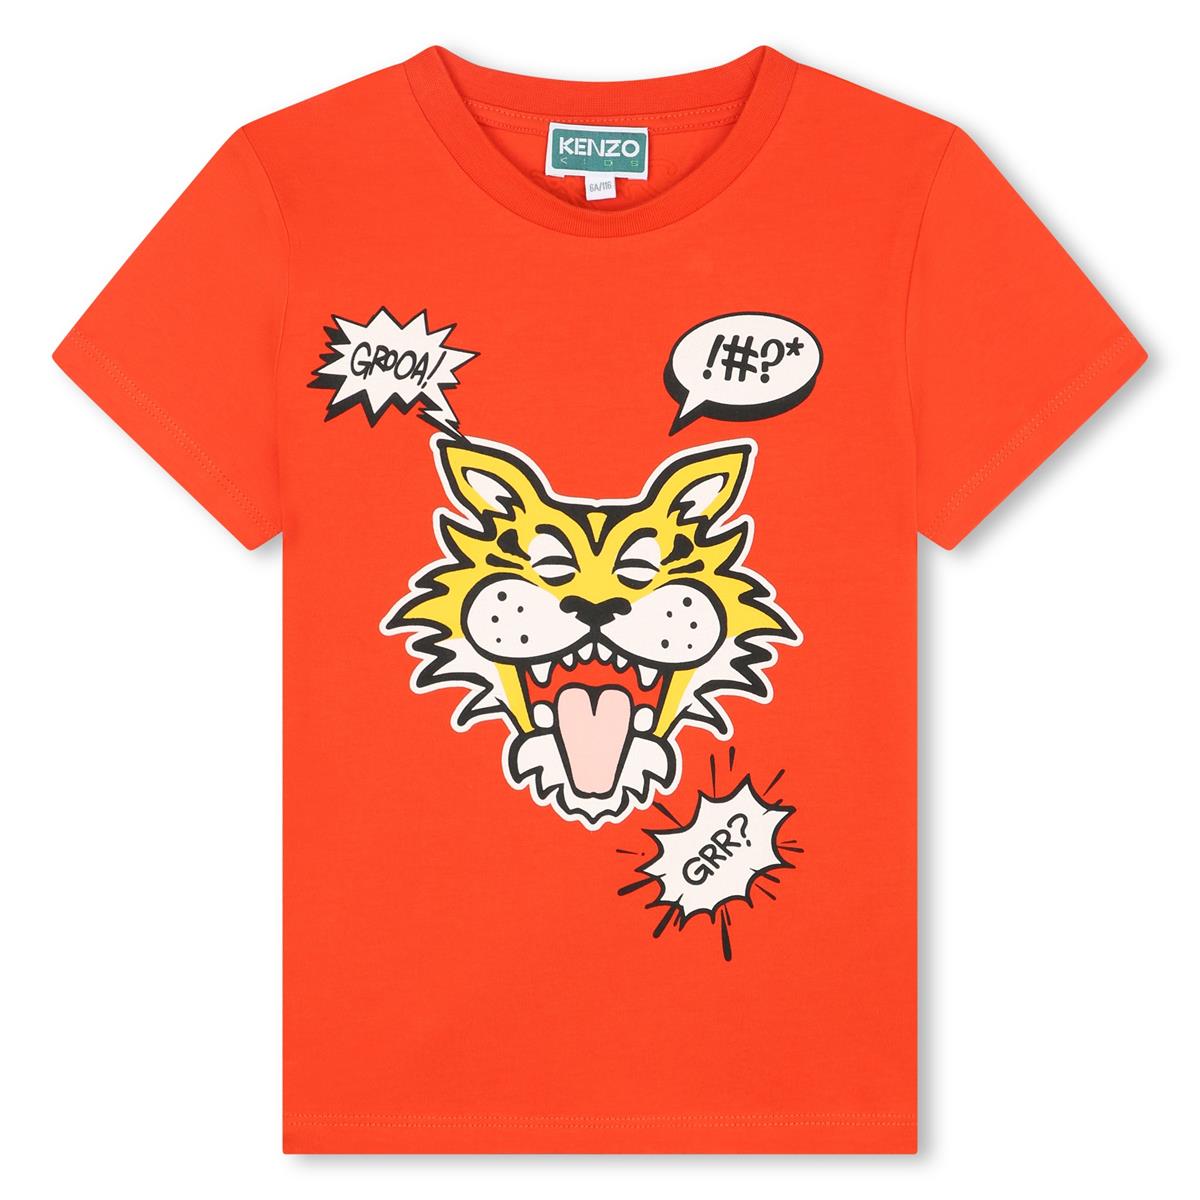 Boys Orange Cotton T-Shirt